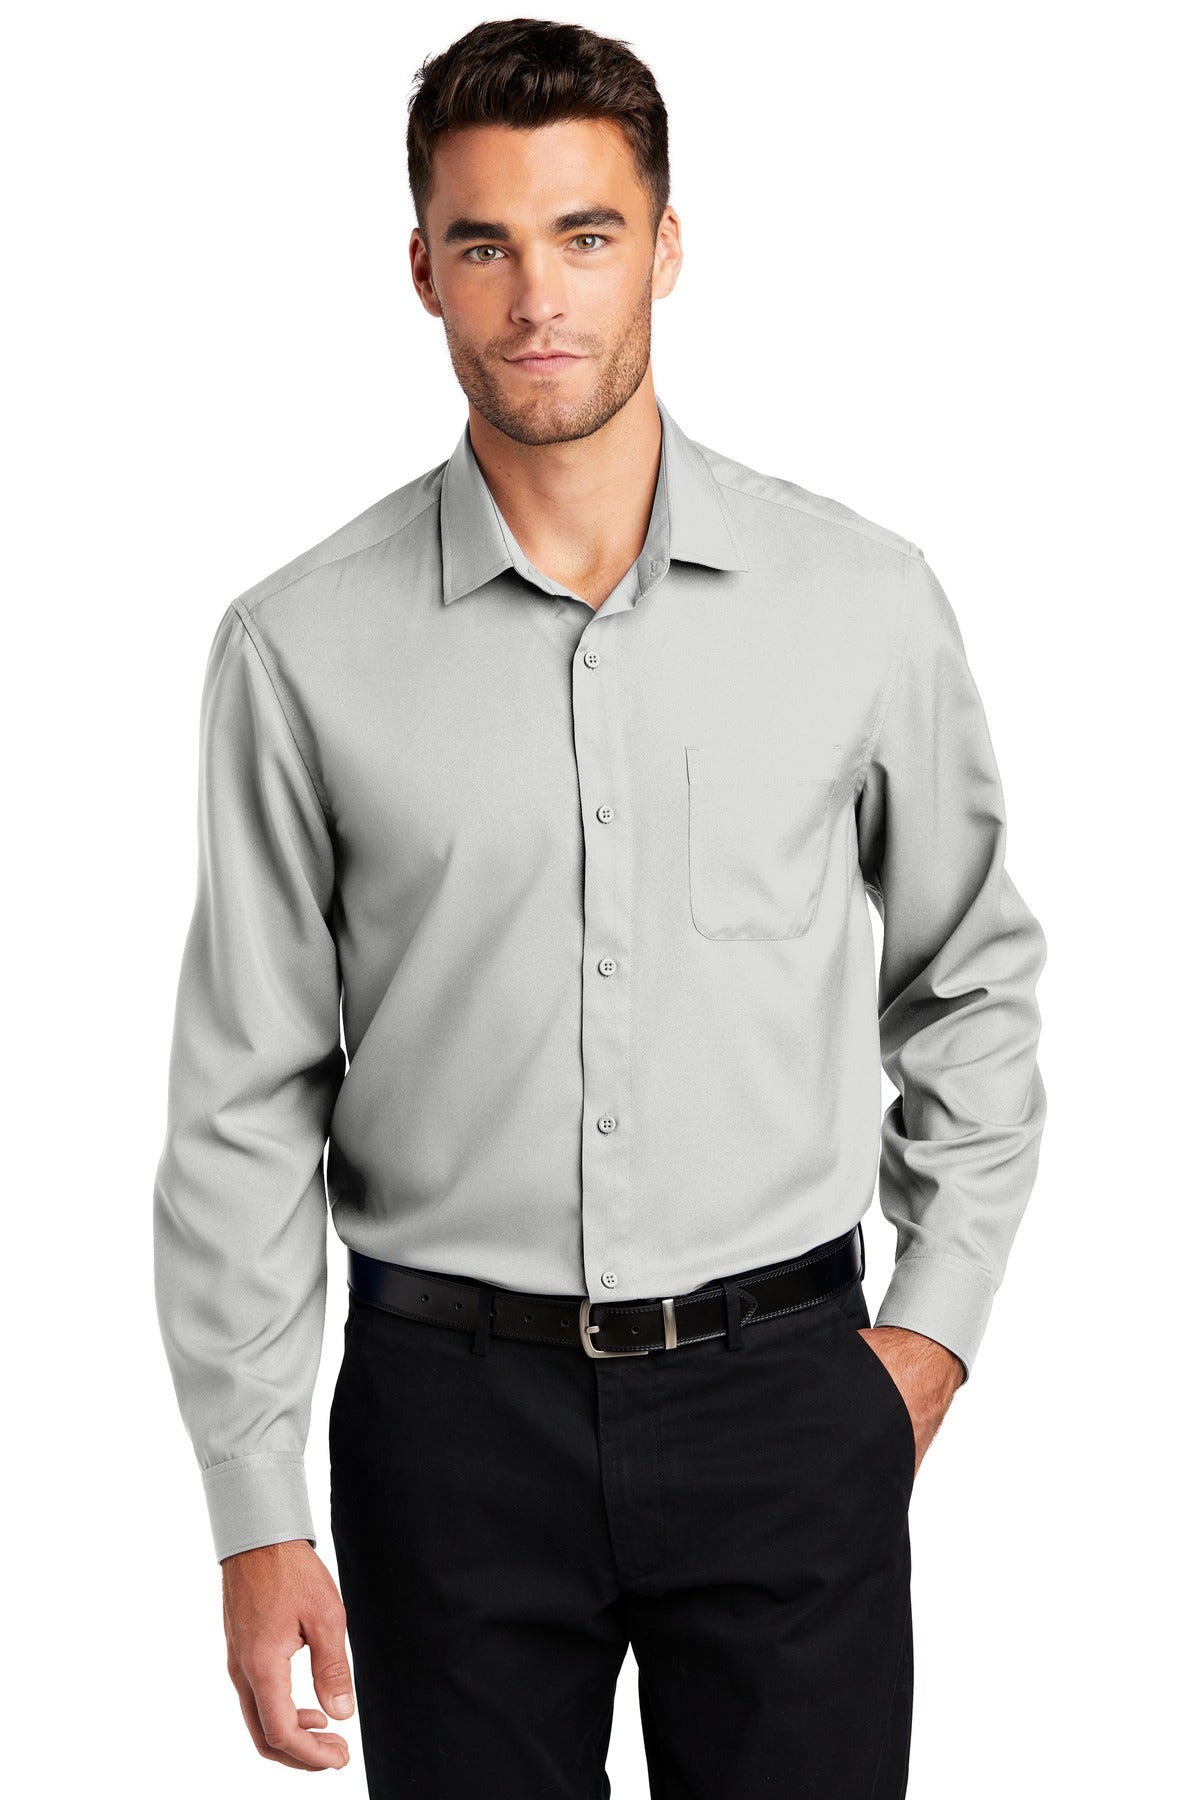 Port Authority Long Sleeve Performance Staff Shirt W401